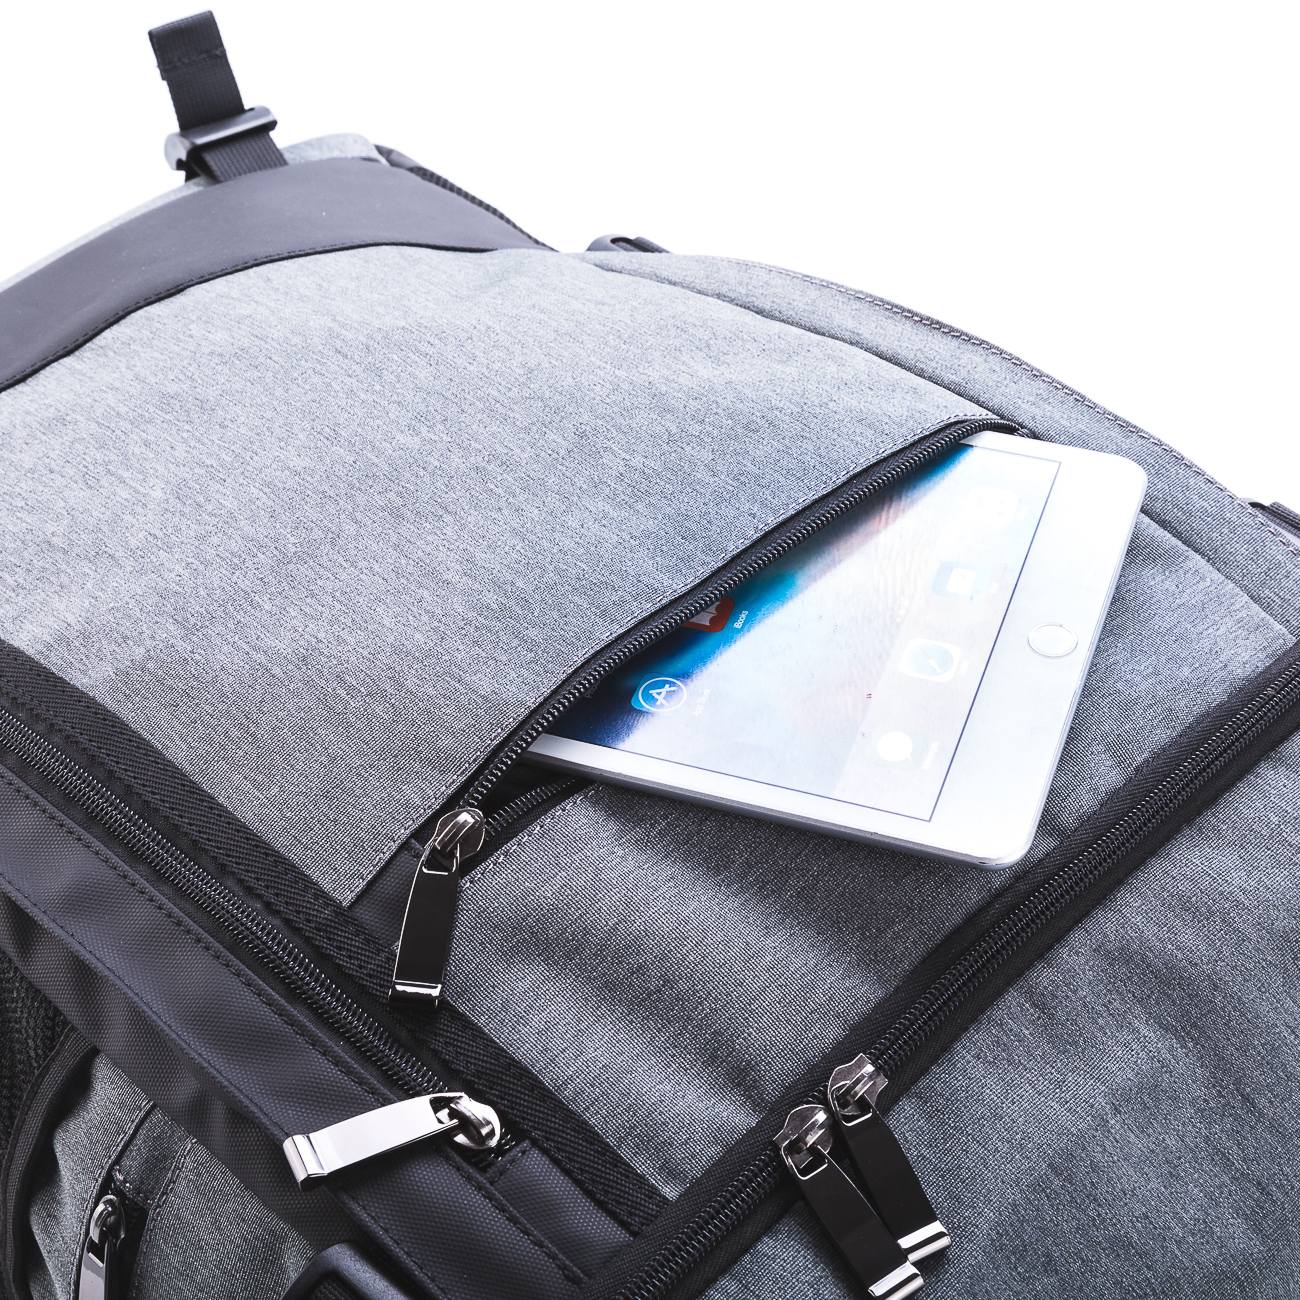 Big Capacity Oxford Travel Laptop Backpack for Men